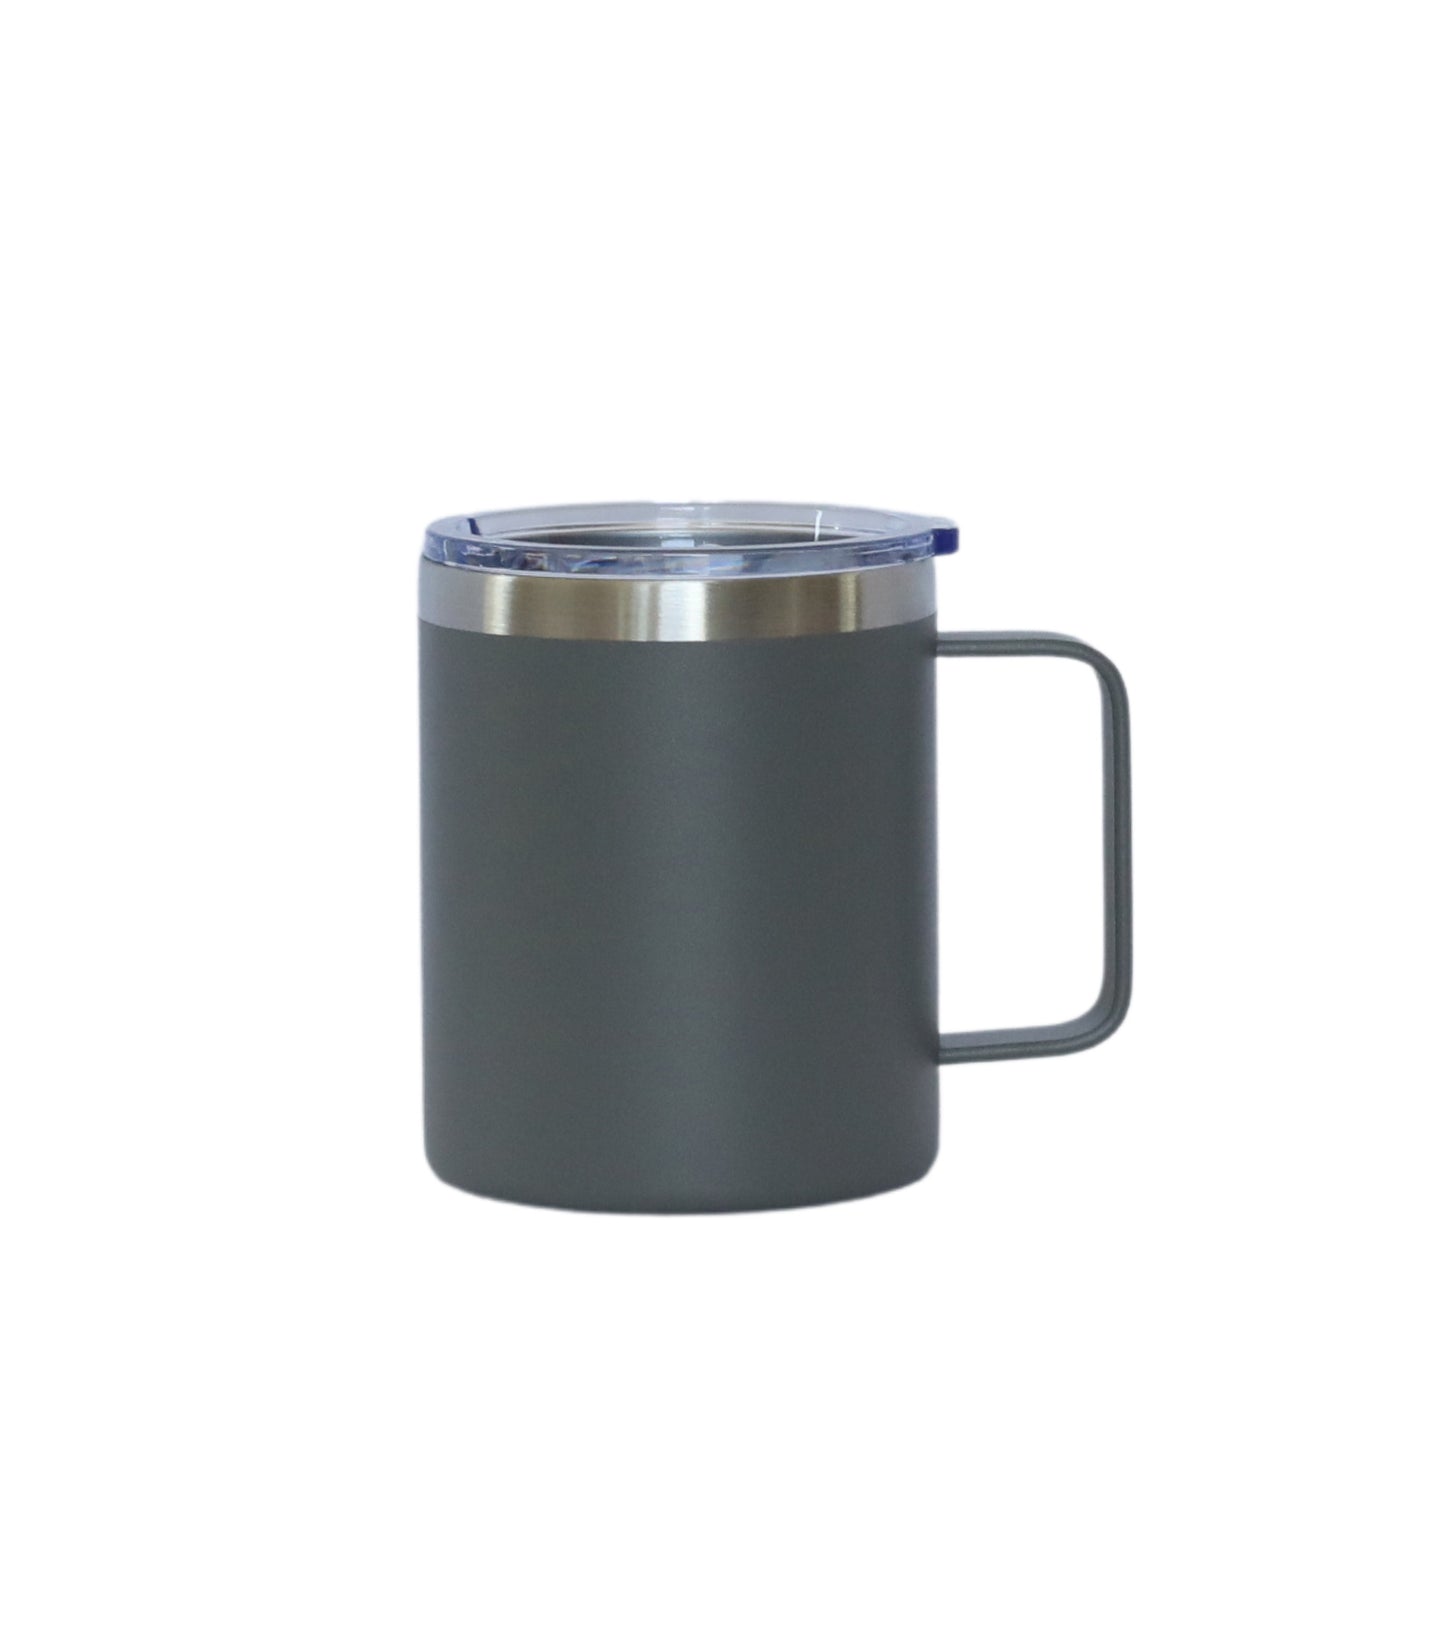 12 Oz Stainless Steel Travel Mug with Handle - Grey